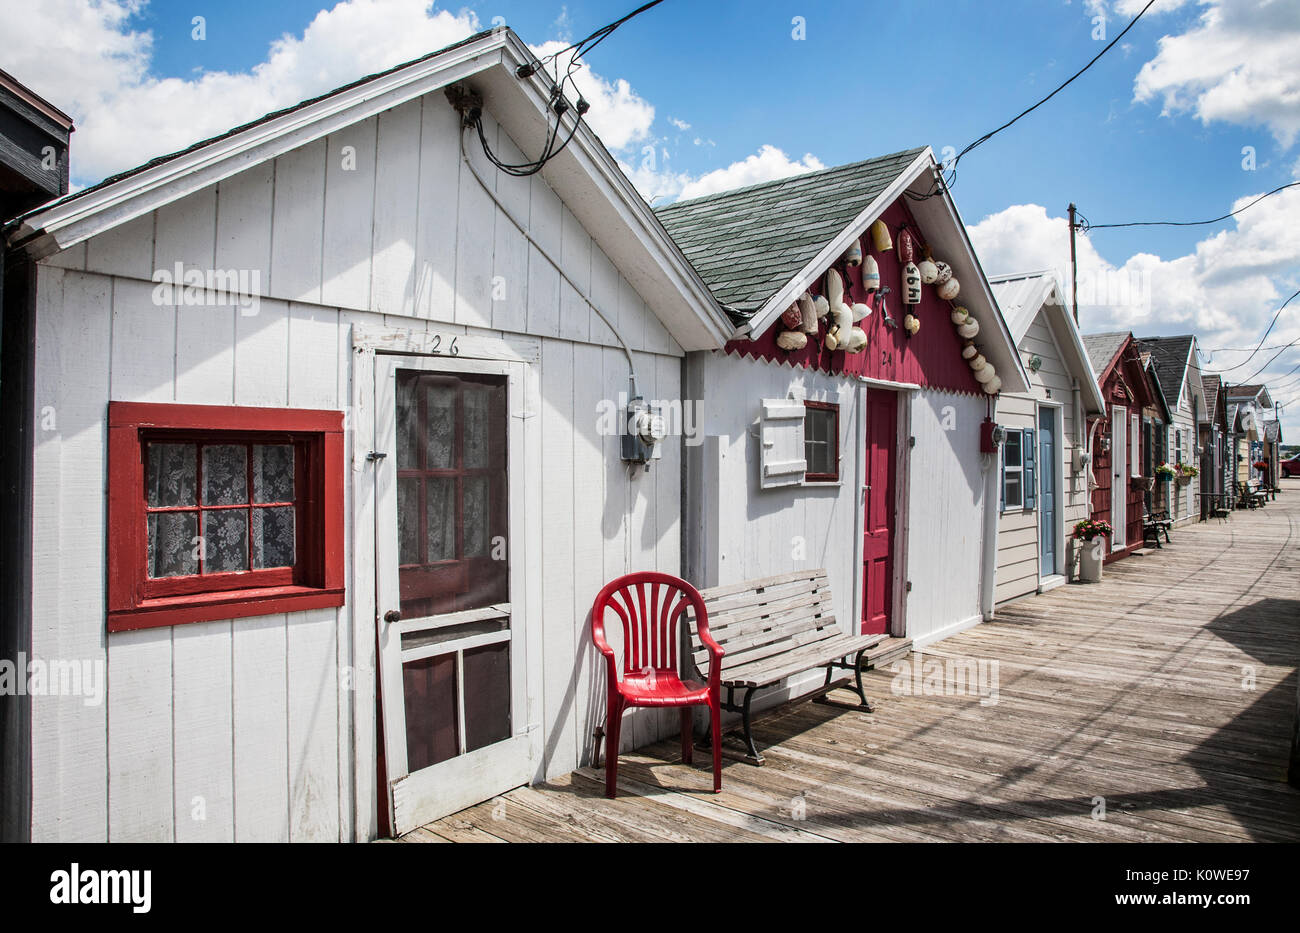 Storica città Canandaigua Pier Boathouse Row, Finger Lakes, Canandaigua, Upstate New York, Stati Uniti d'America, USA, luglio 2017 storico immagini vintage Foto Stock